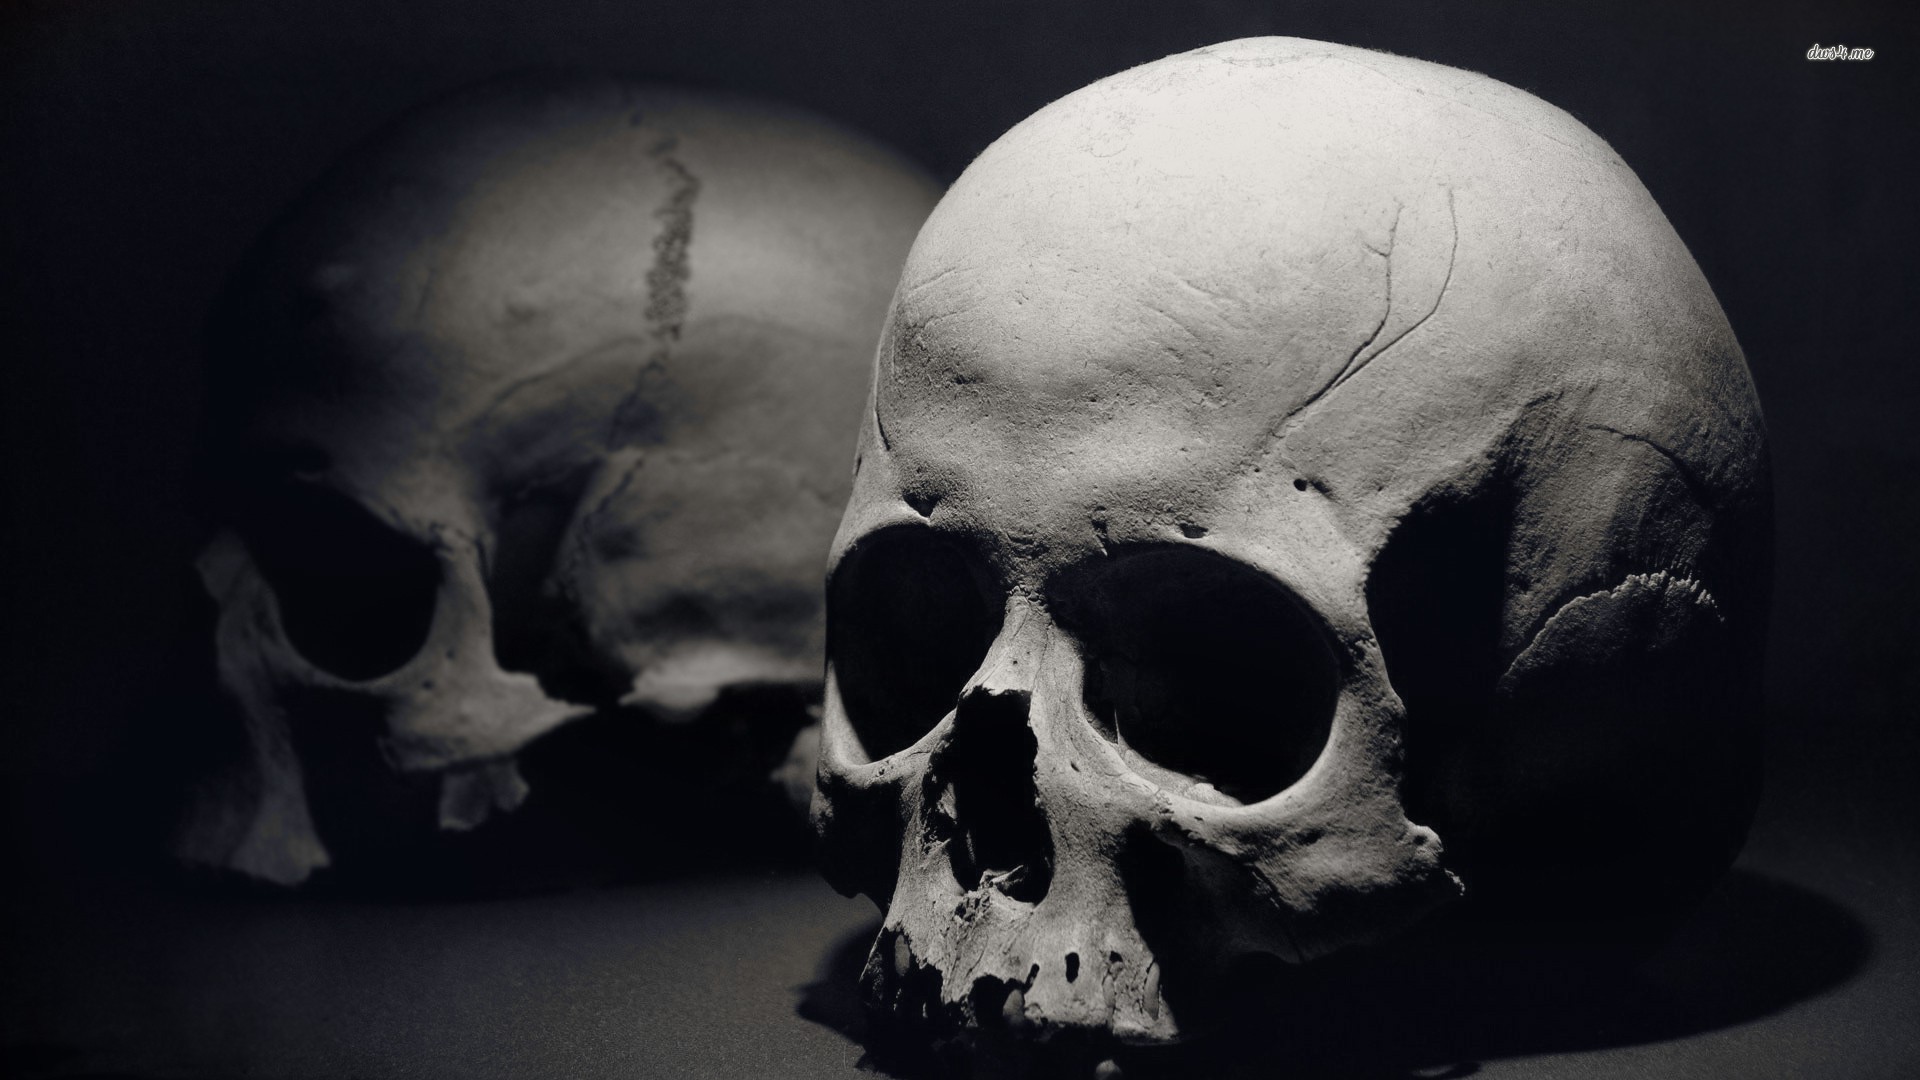 Human Skull 19 1080 Photography Wallpaper Anthropology Students Association